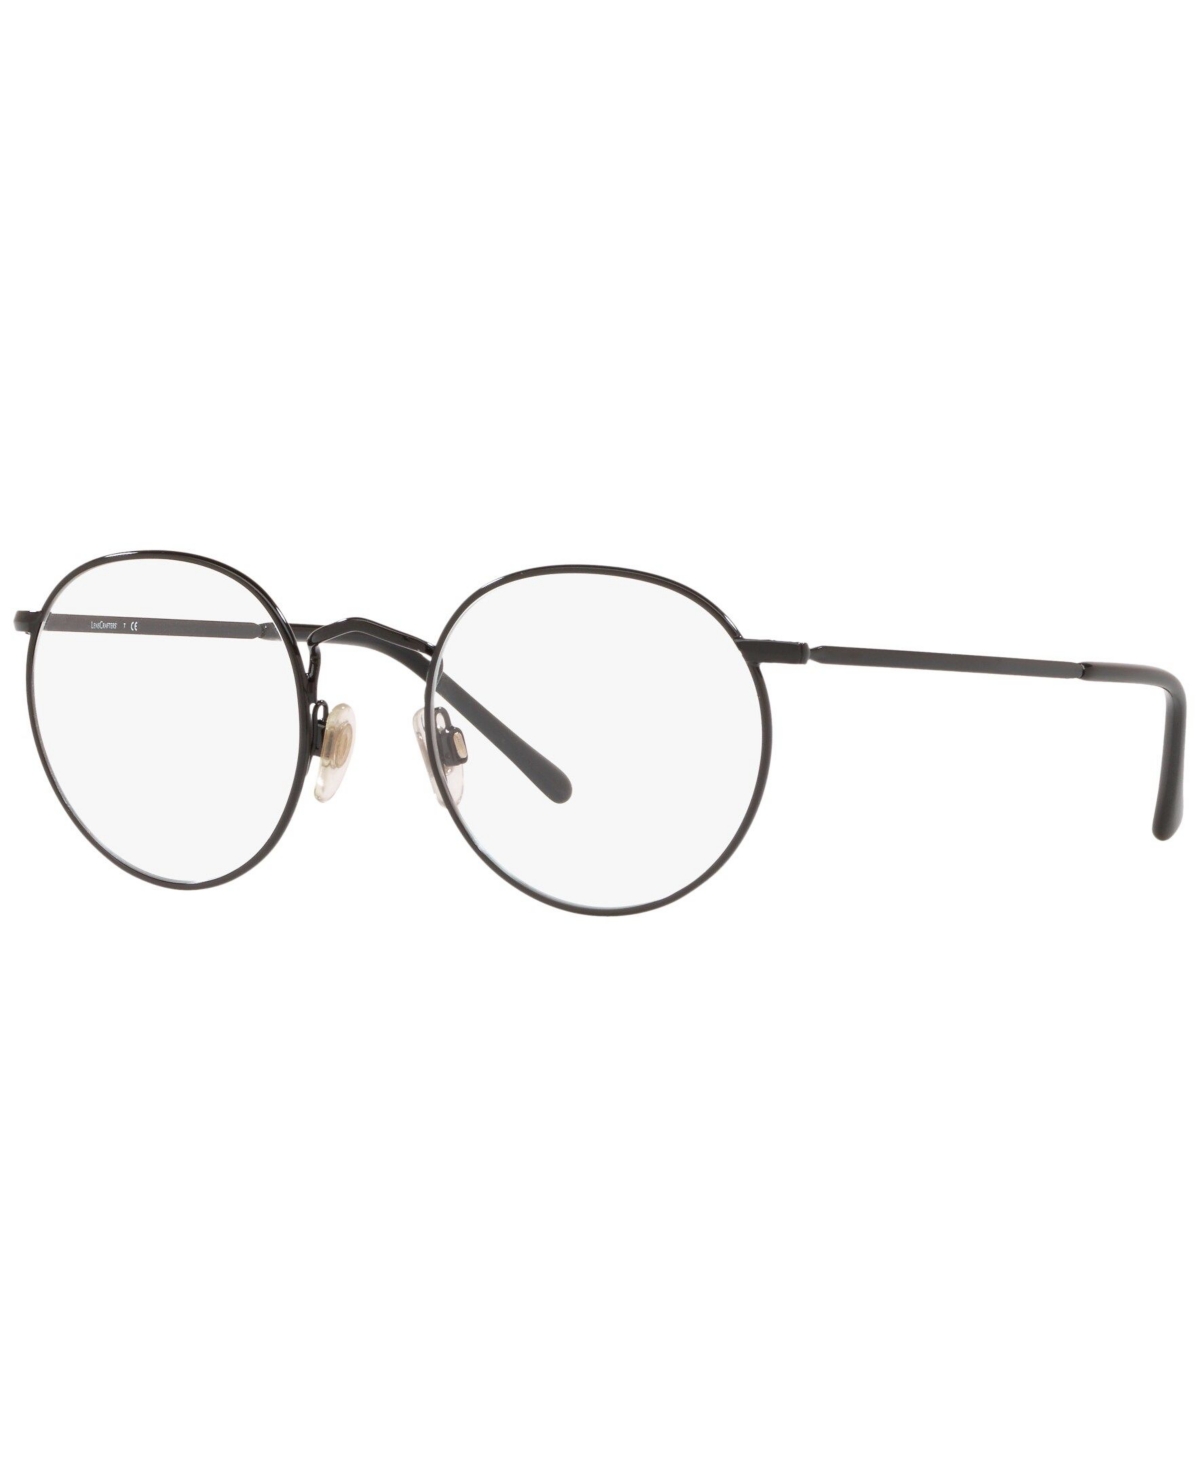 EC1001 Men's Panthos Eyeglasses - Gray